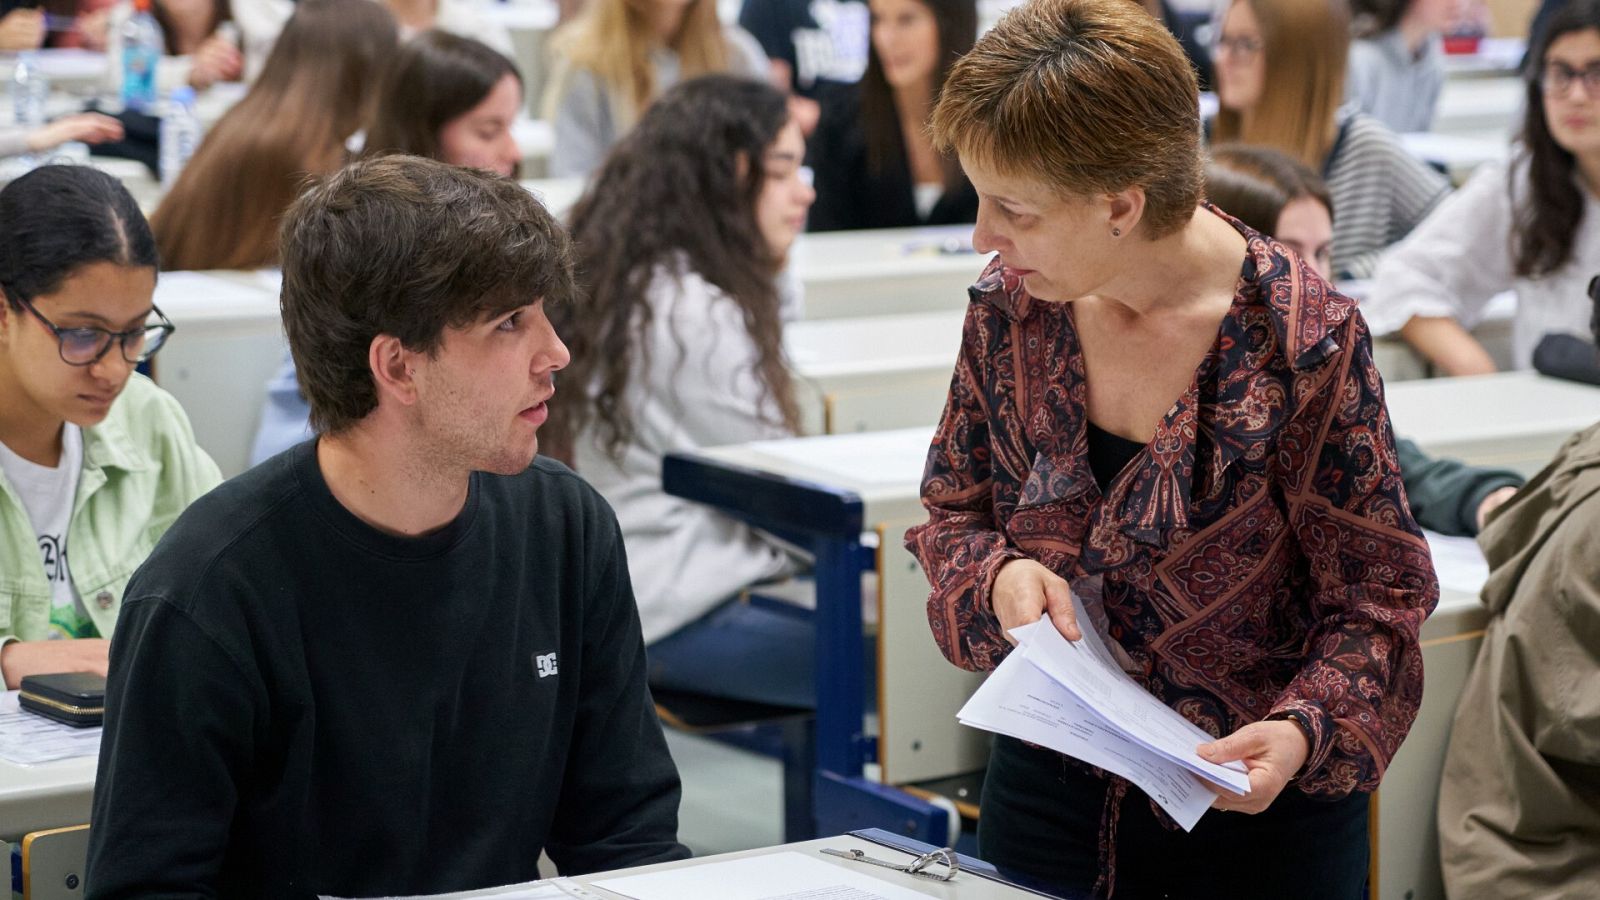 Alumnos de Bachillerato realizan la prueba de acceso a la universidad en Euskadi.